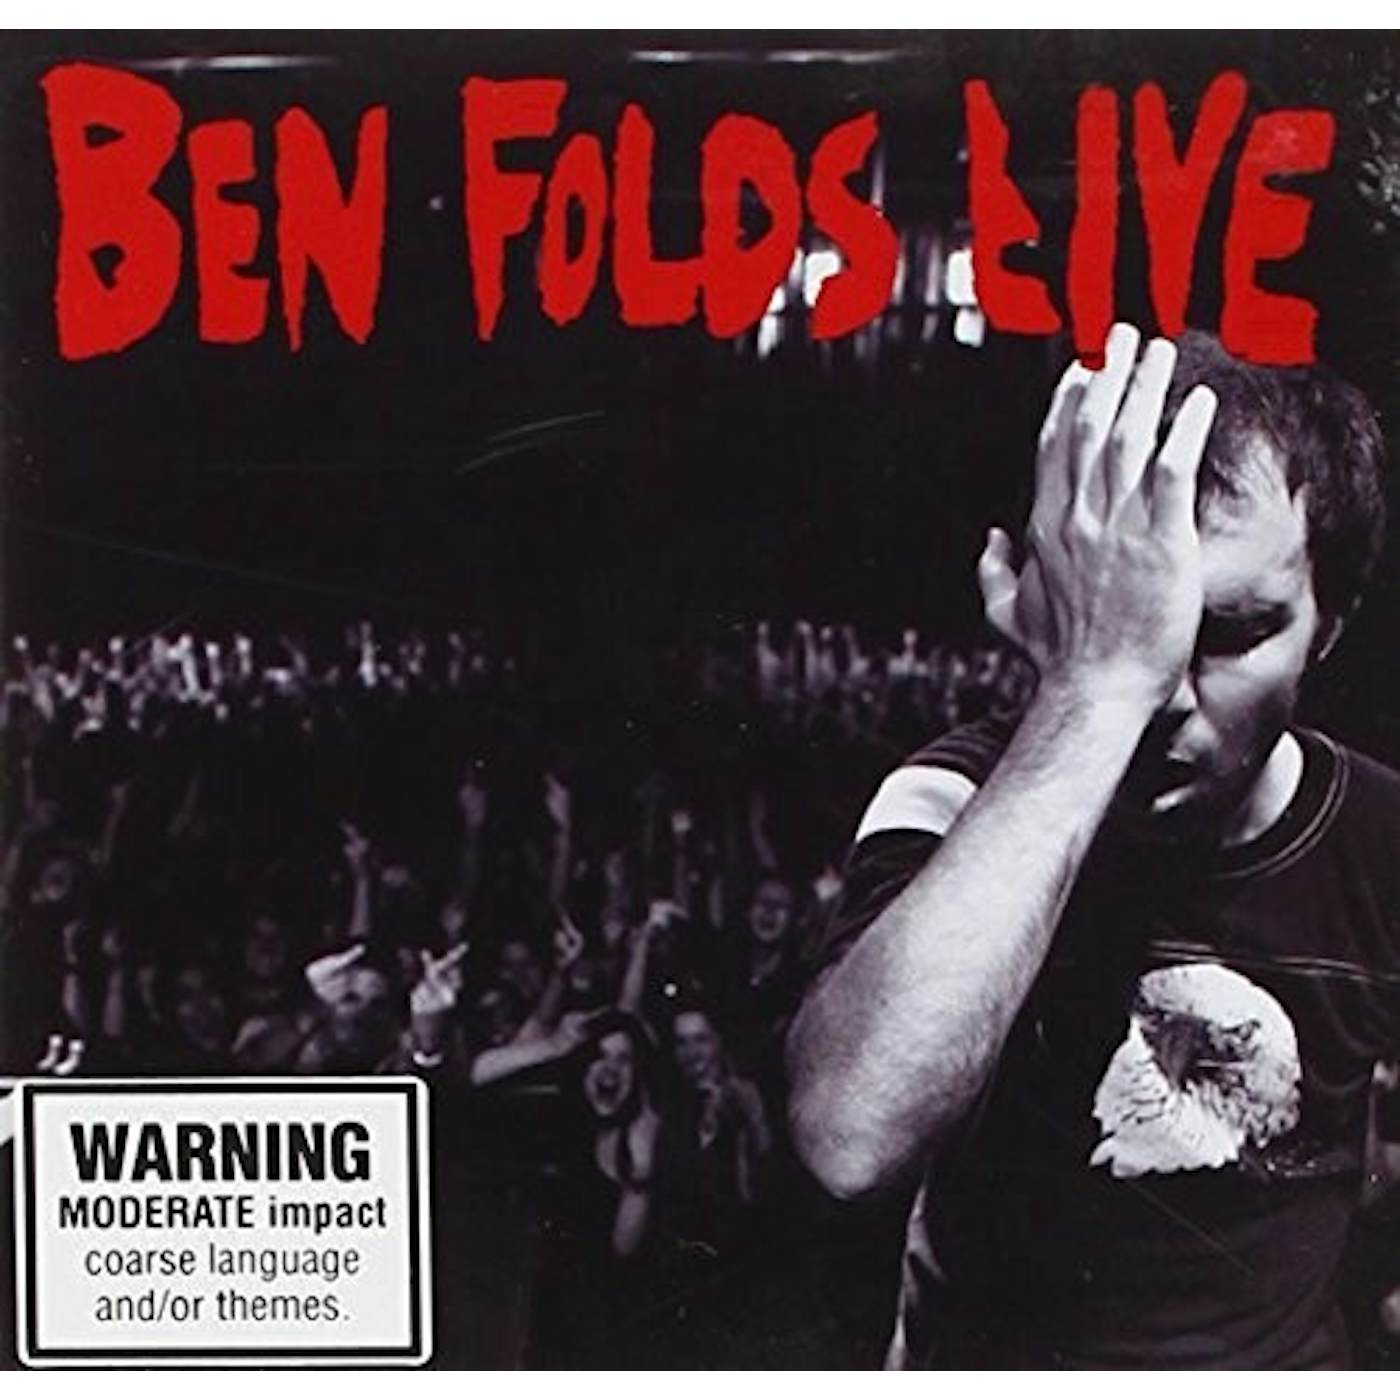 BEN FOLDS LIVE CD